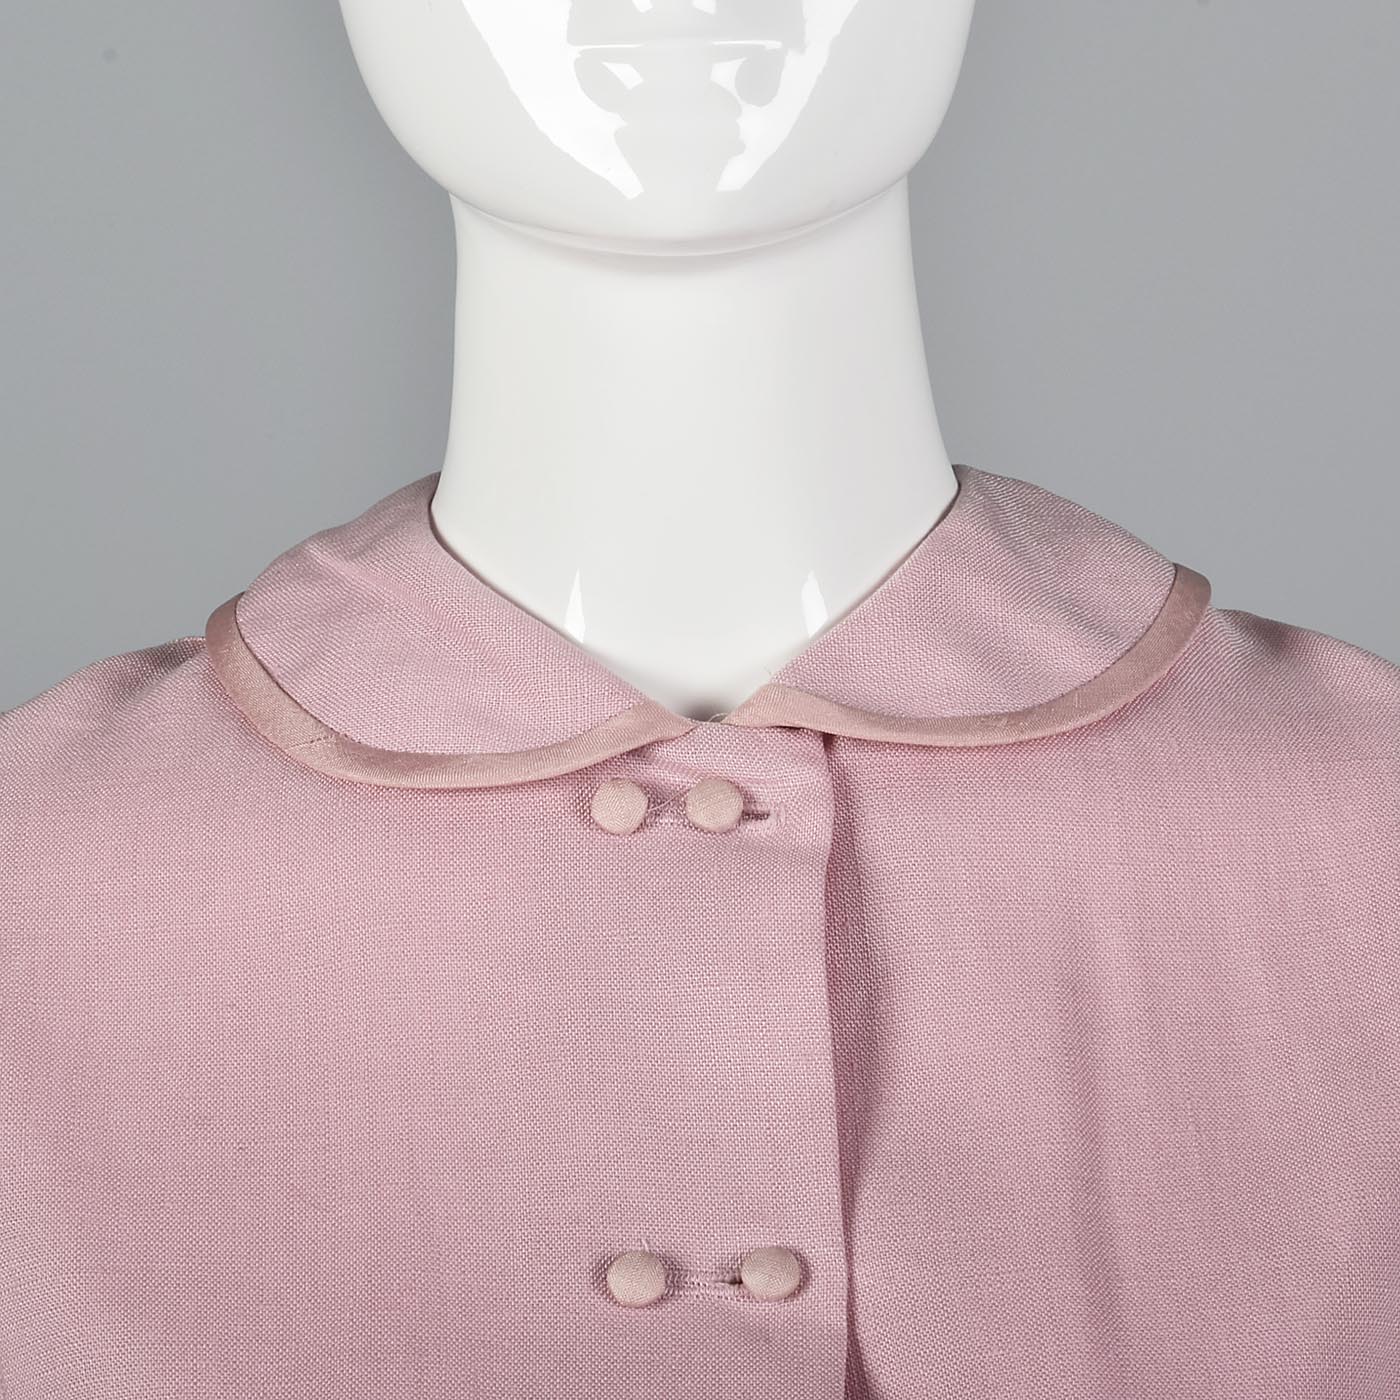 1960s Deadstock Pink Linen Dress